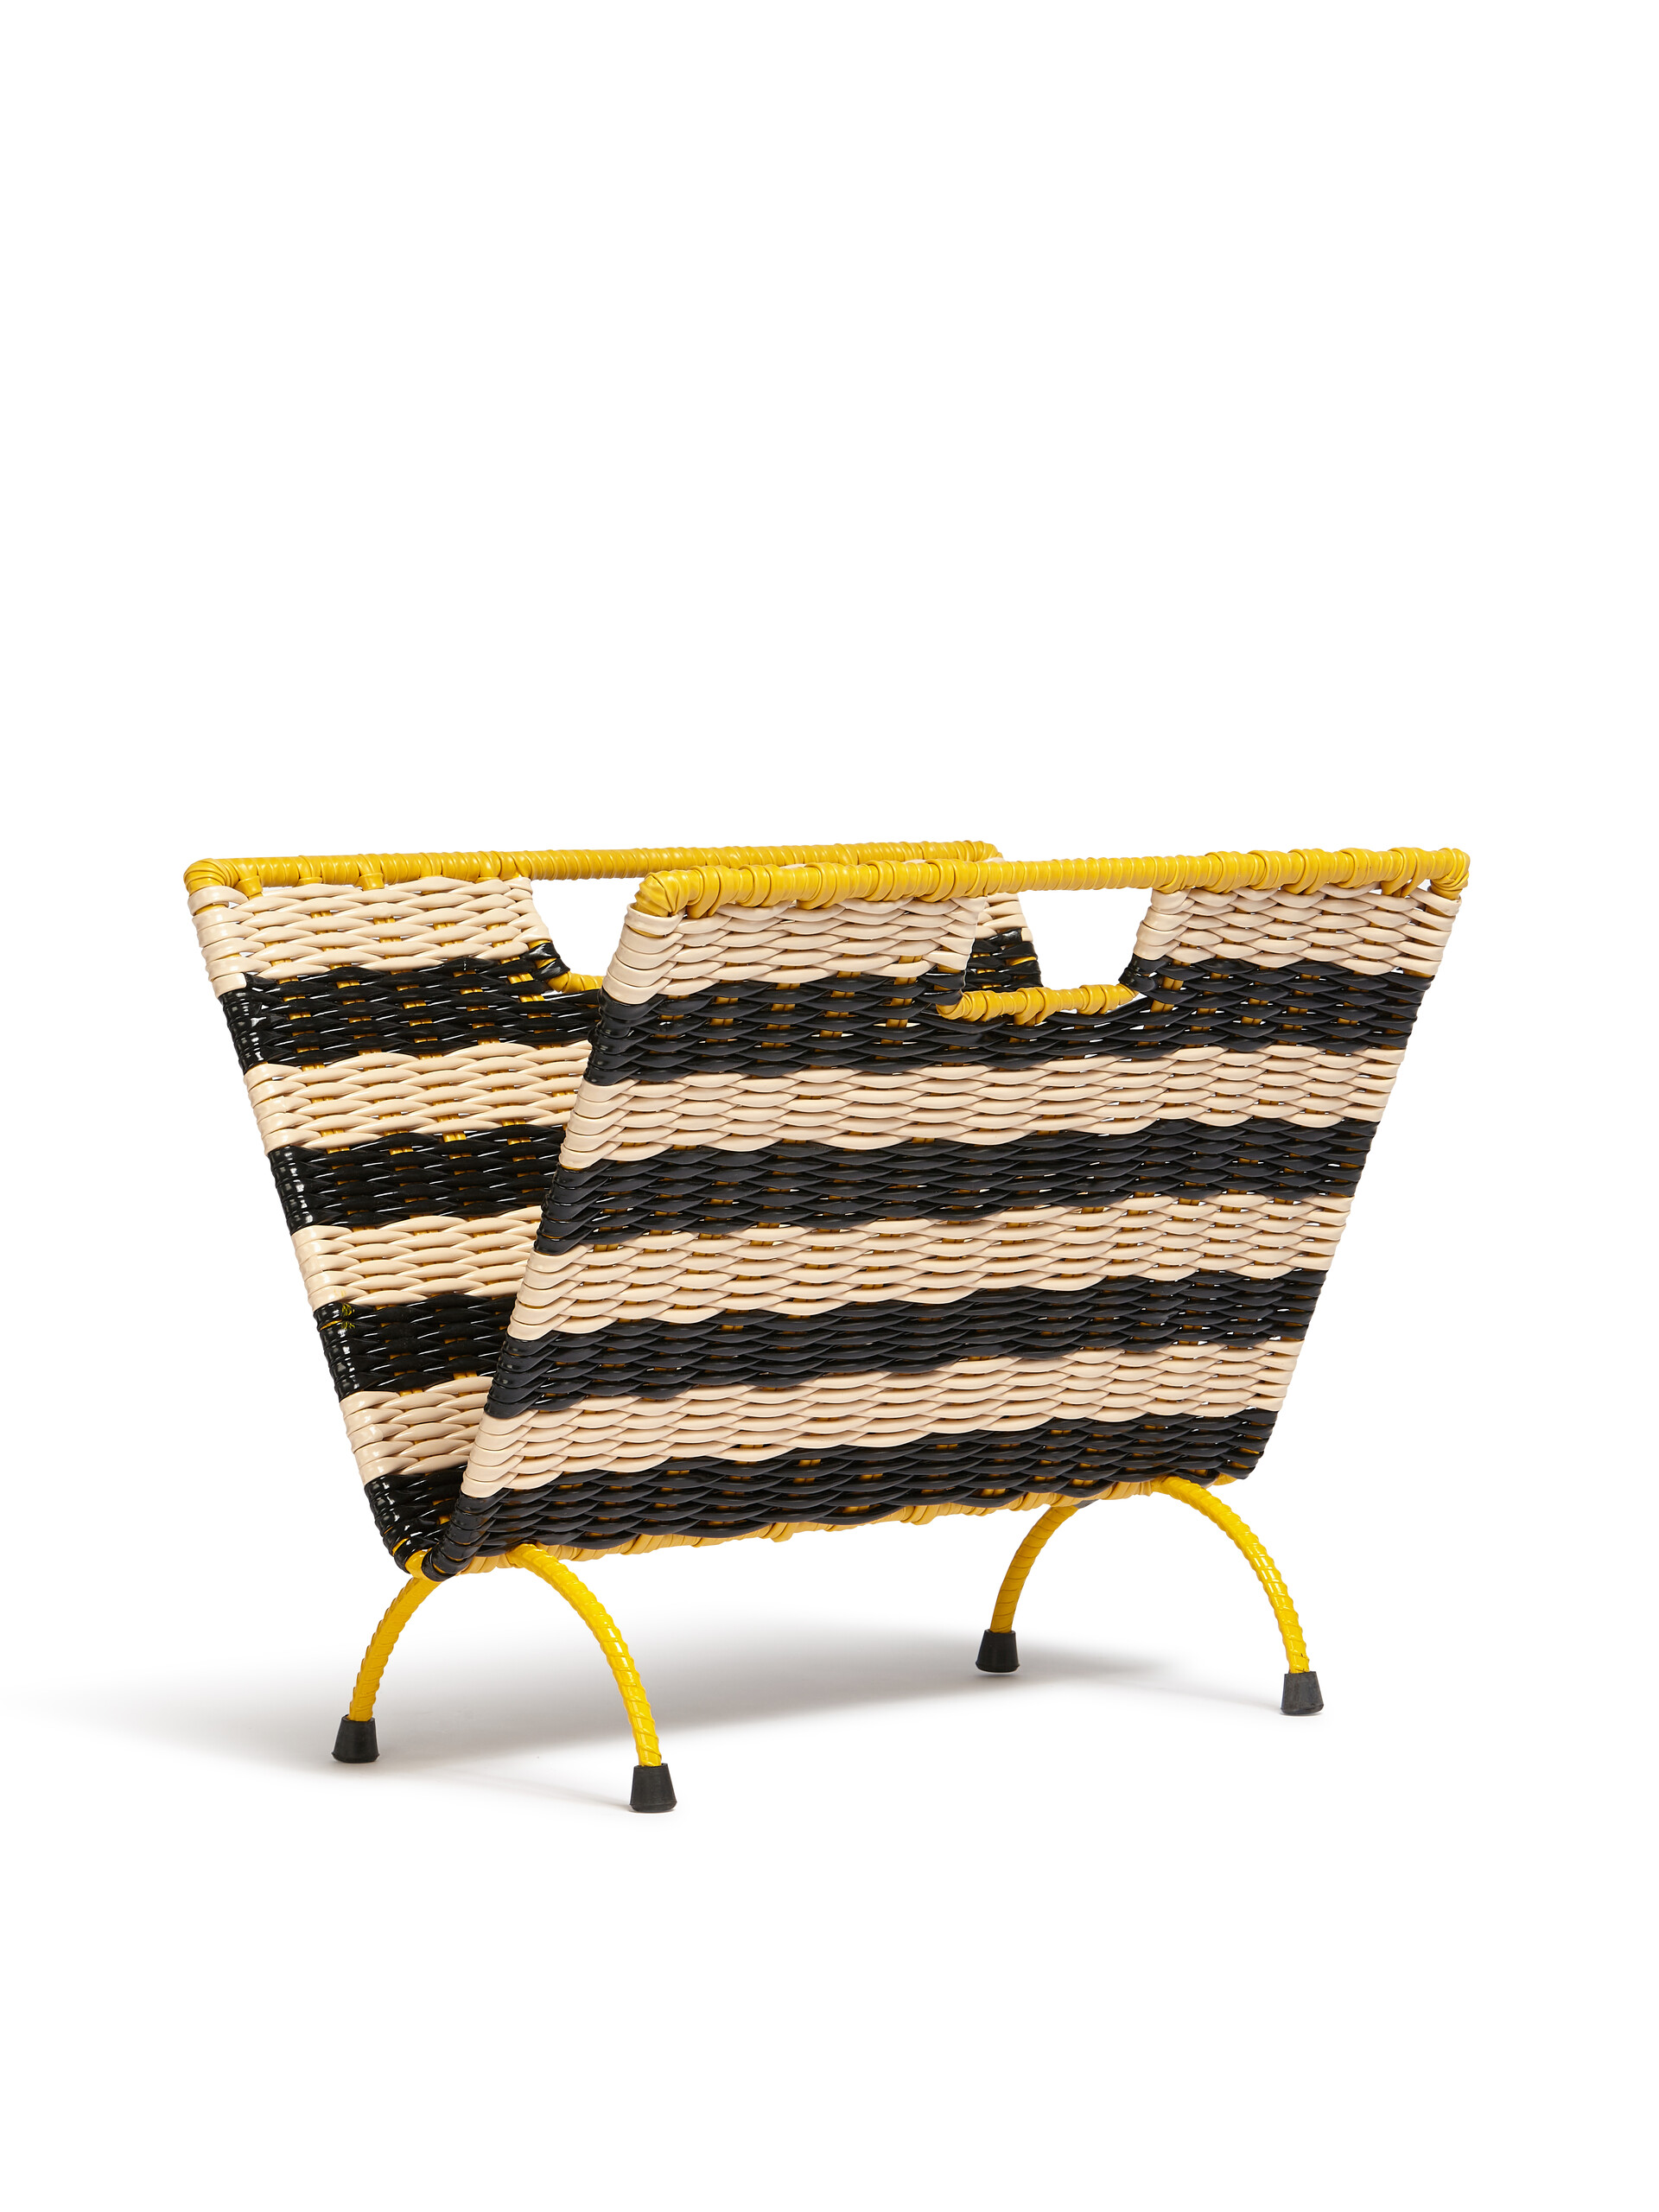 MARNI MARKET beige and black magazine rack - Furniture - Image 2